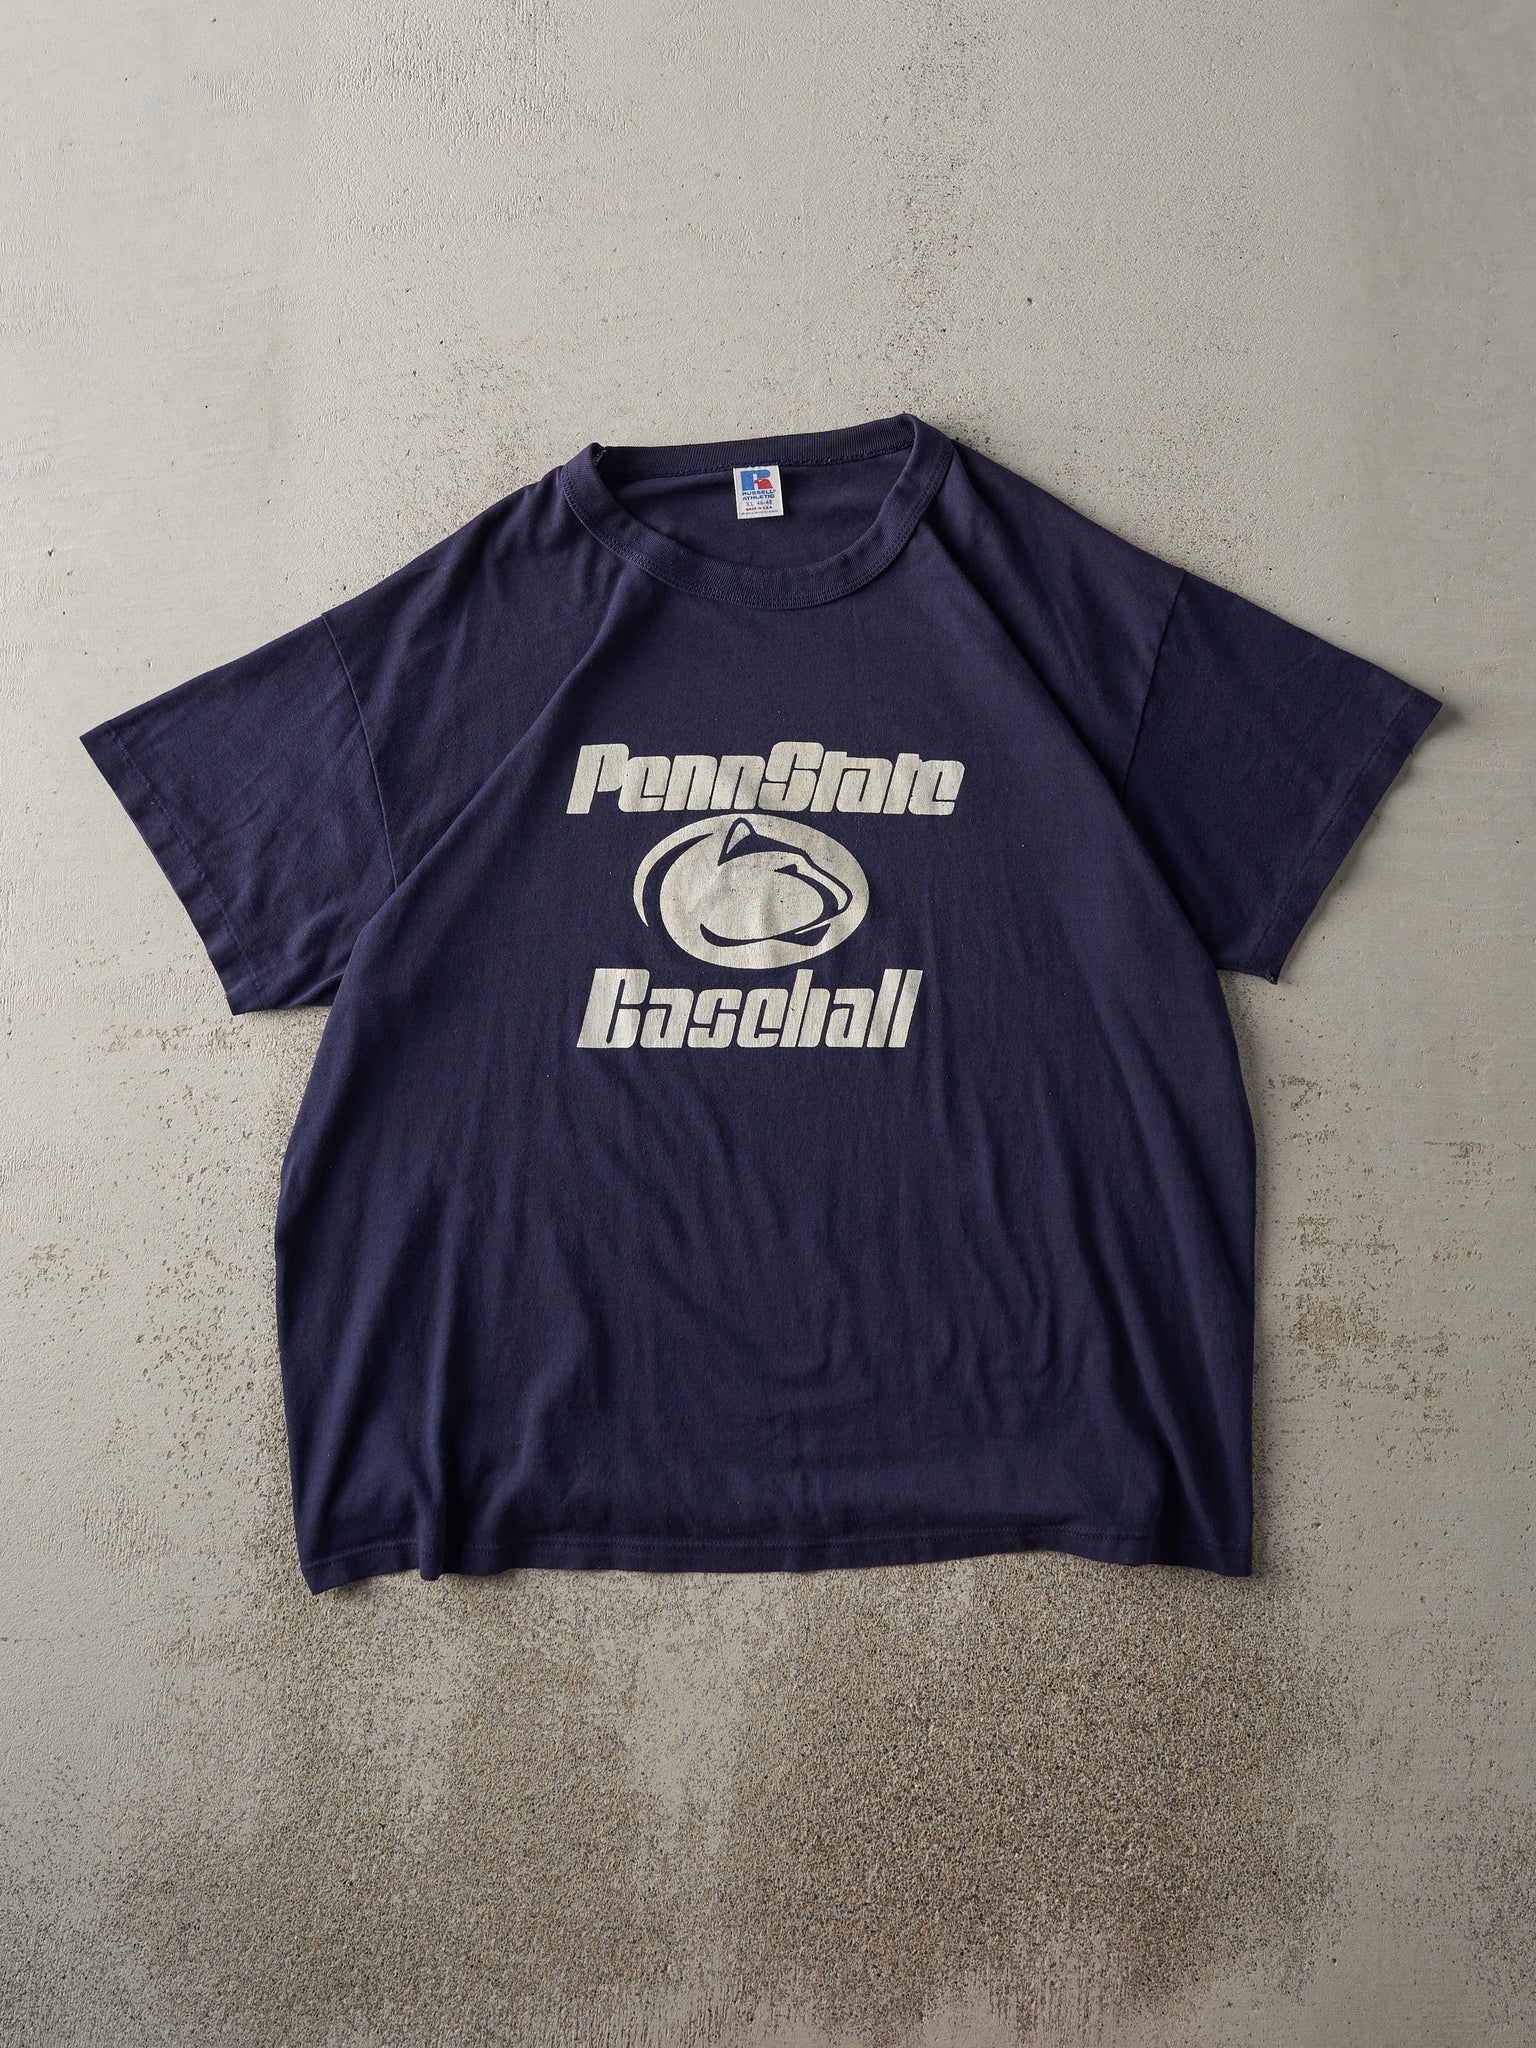 Vintage 90s Navy Blue Penn State Baseball Tee (L)